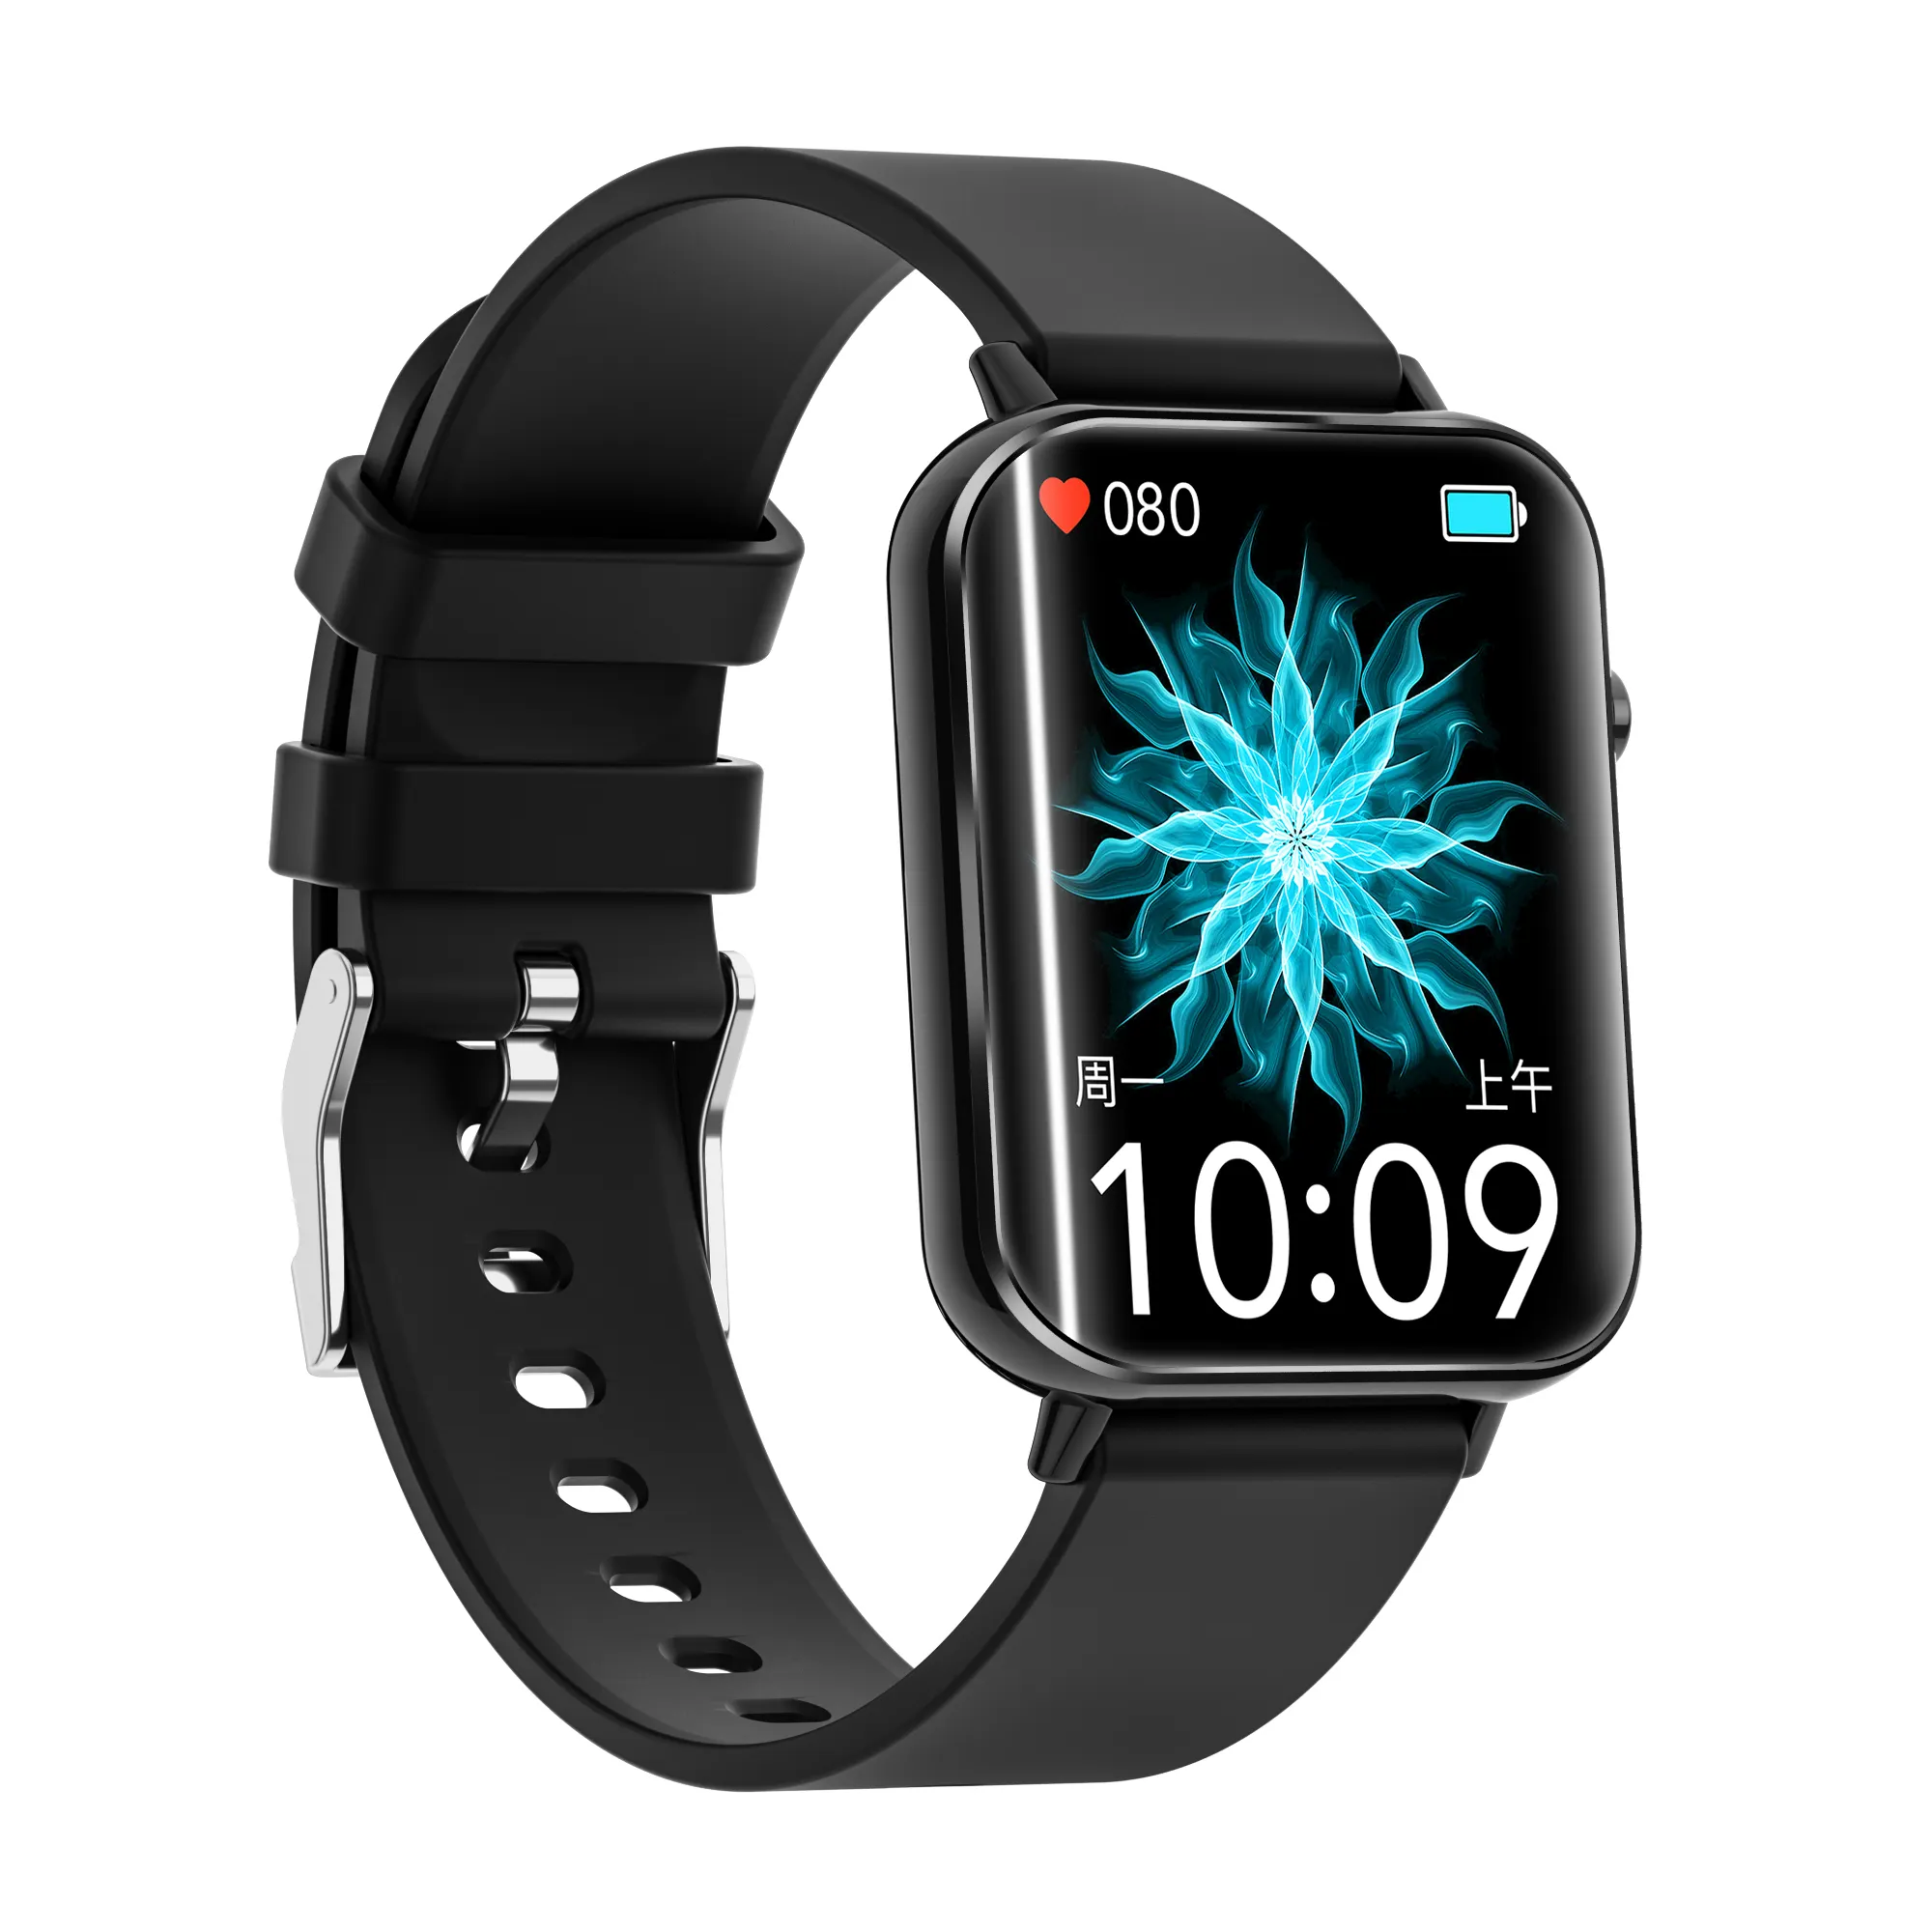 Quadratische mobile Touchscreen-Uhr Relojes Inteli gentes Para Hombre Montre Connecte Bt Calling Music Smart Watches